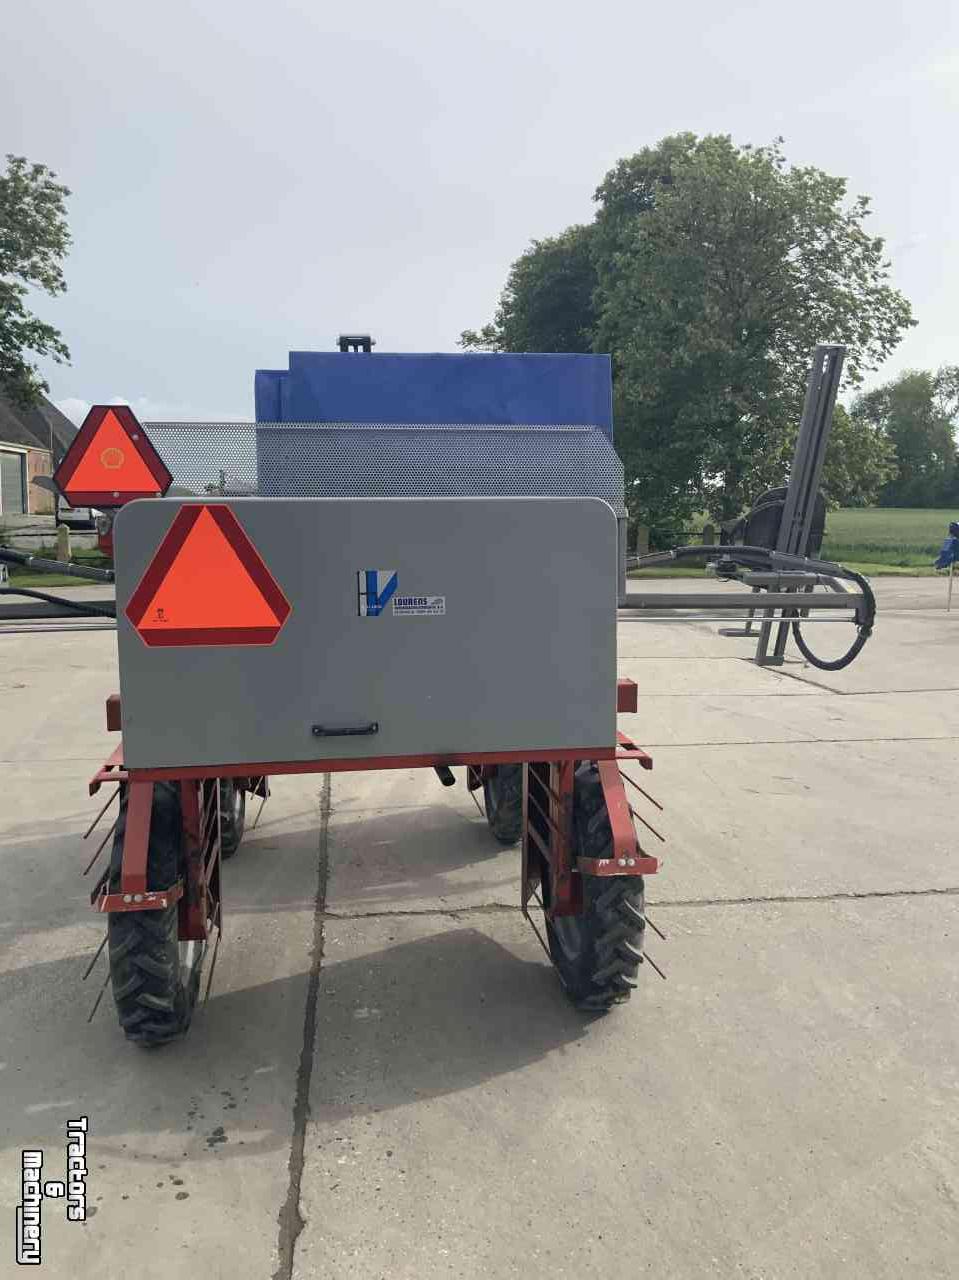 Chariot de sélection Pomme de terre Vlaming MPC-4 selectiewagen | diesel | 4 wielen